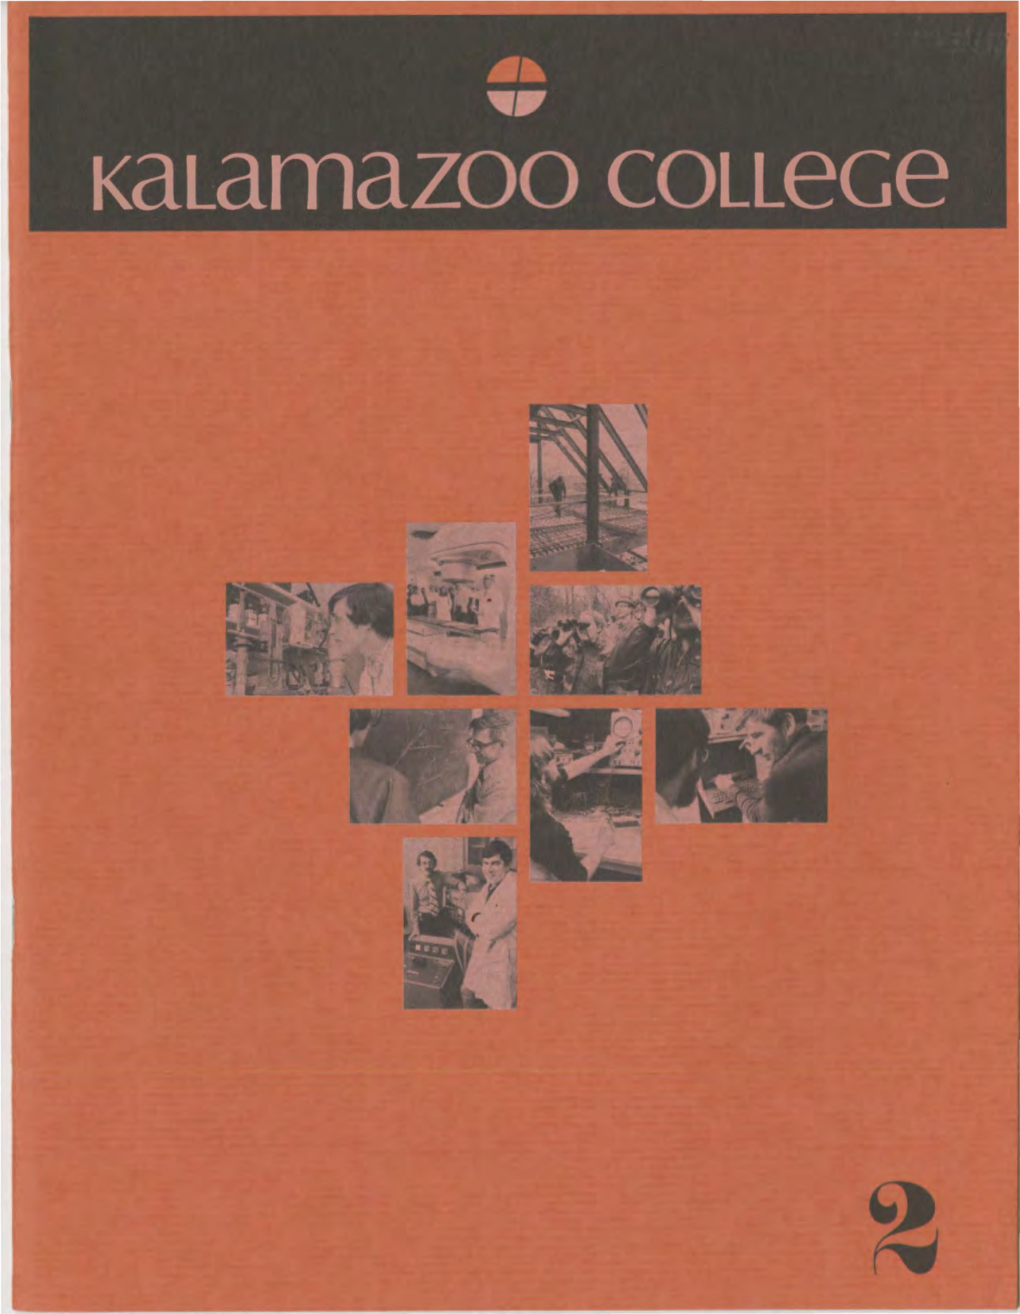 Kalamazoo College (1975, No. 2)